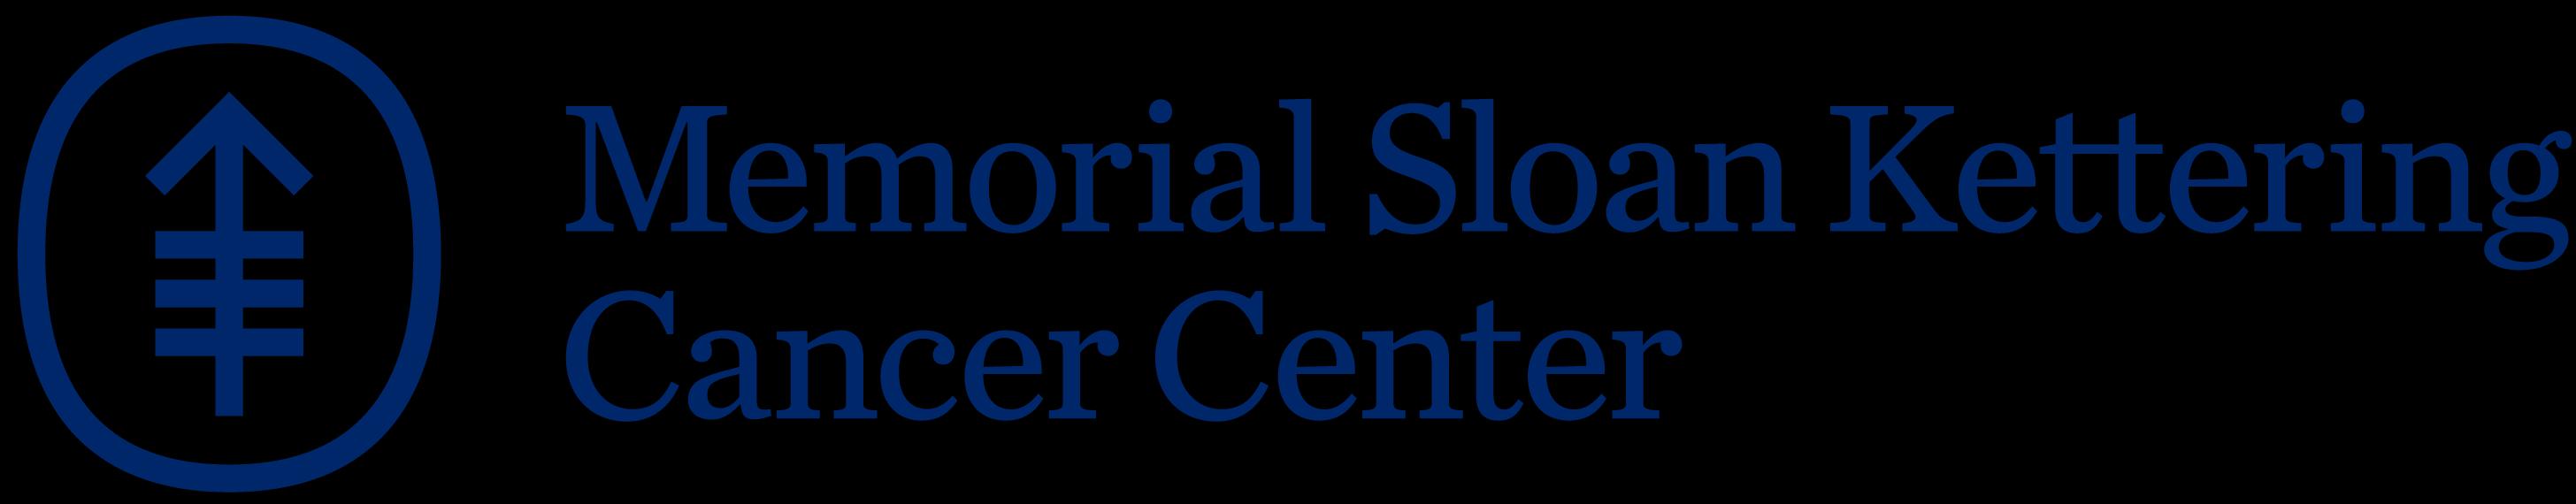 Memorial Sloan Kettering Cancer Center_logo